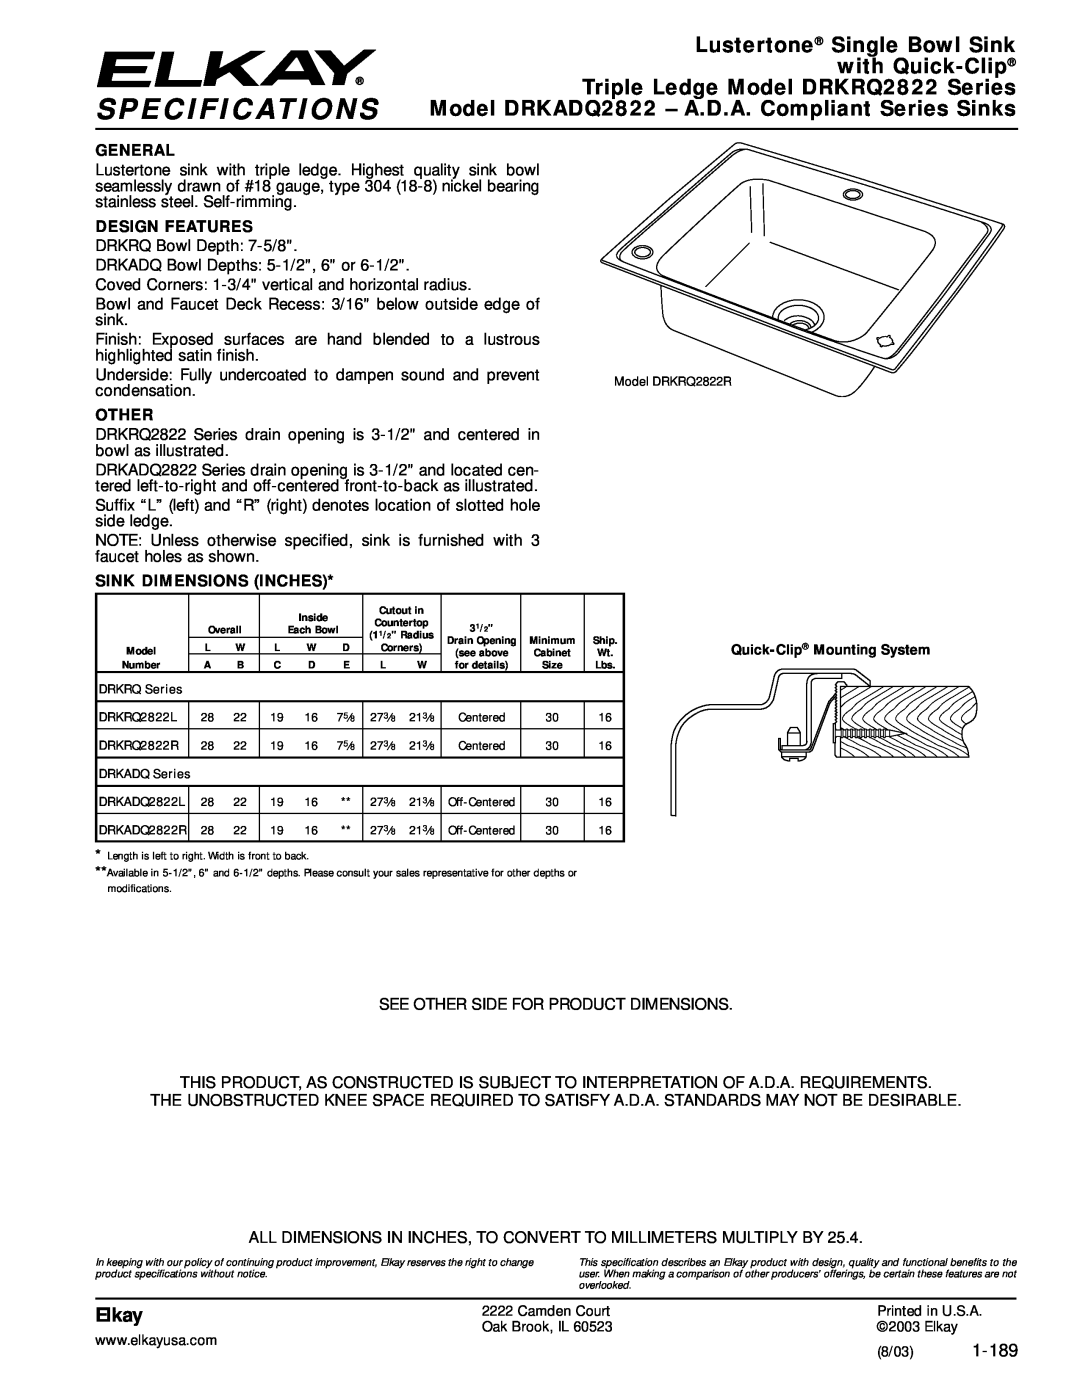 Elkay specifications Lustertone Single Bowl Sink, with Quick-Clip, Triple Ledge Model DRKRQ2822 Series, Elkay, 1-189 